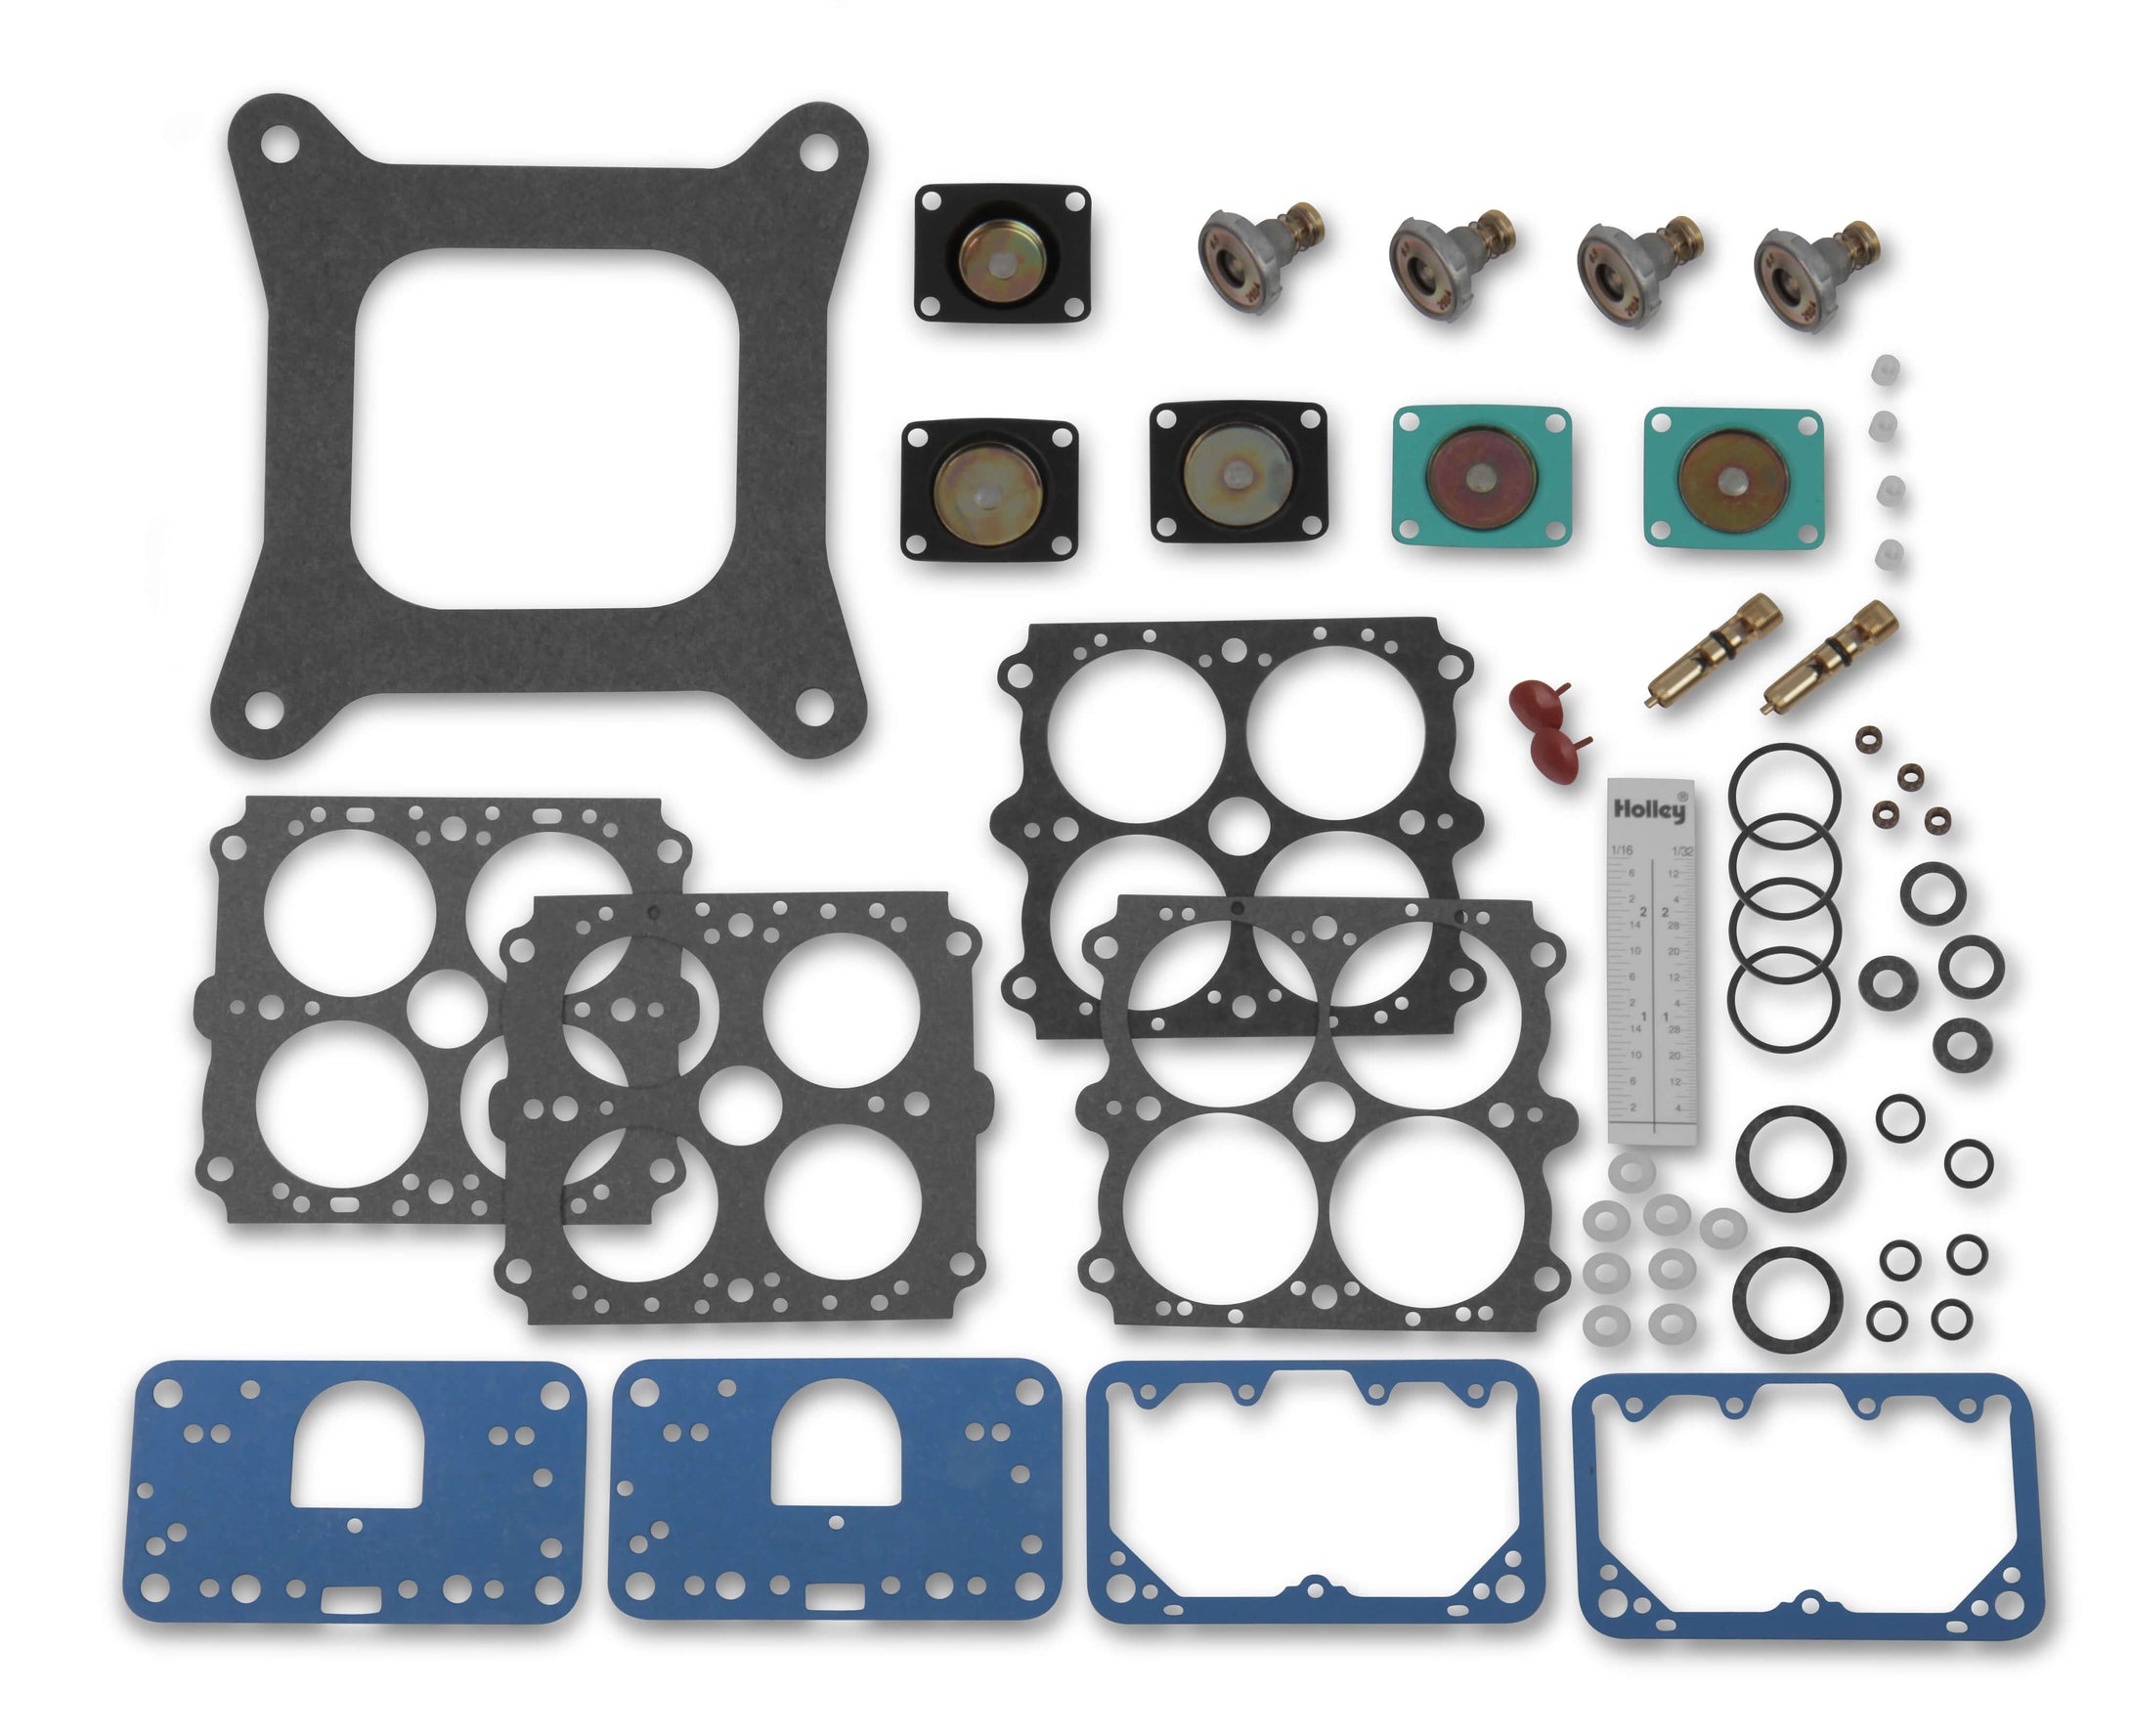 Holley Fast Kit Carburettor Rebuild Kit Model Number 4150 HP